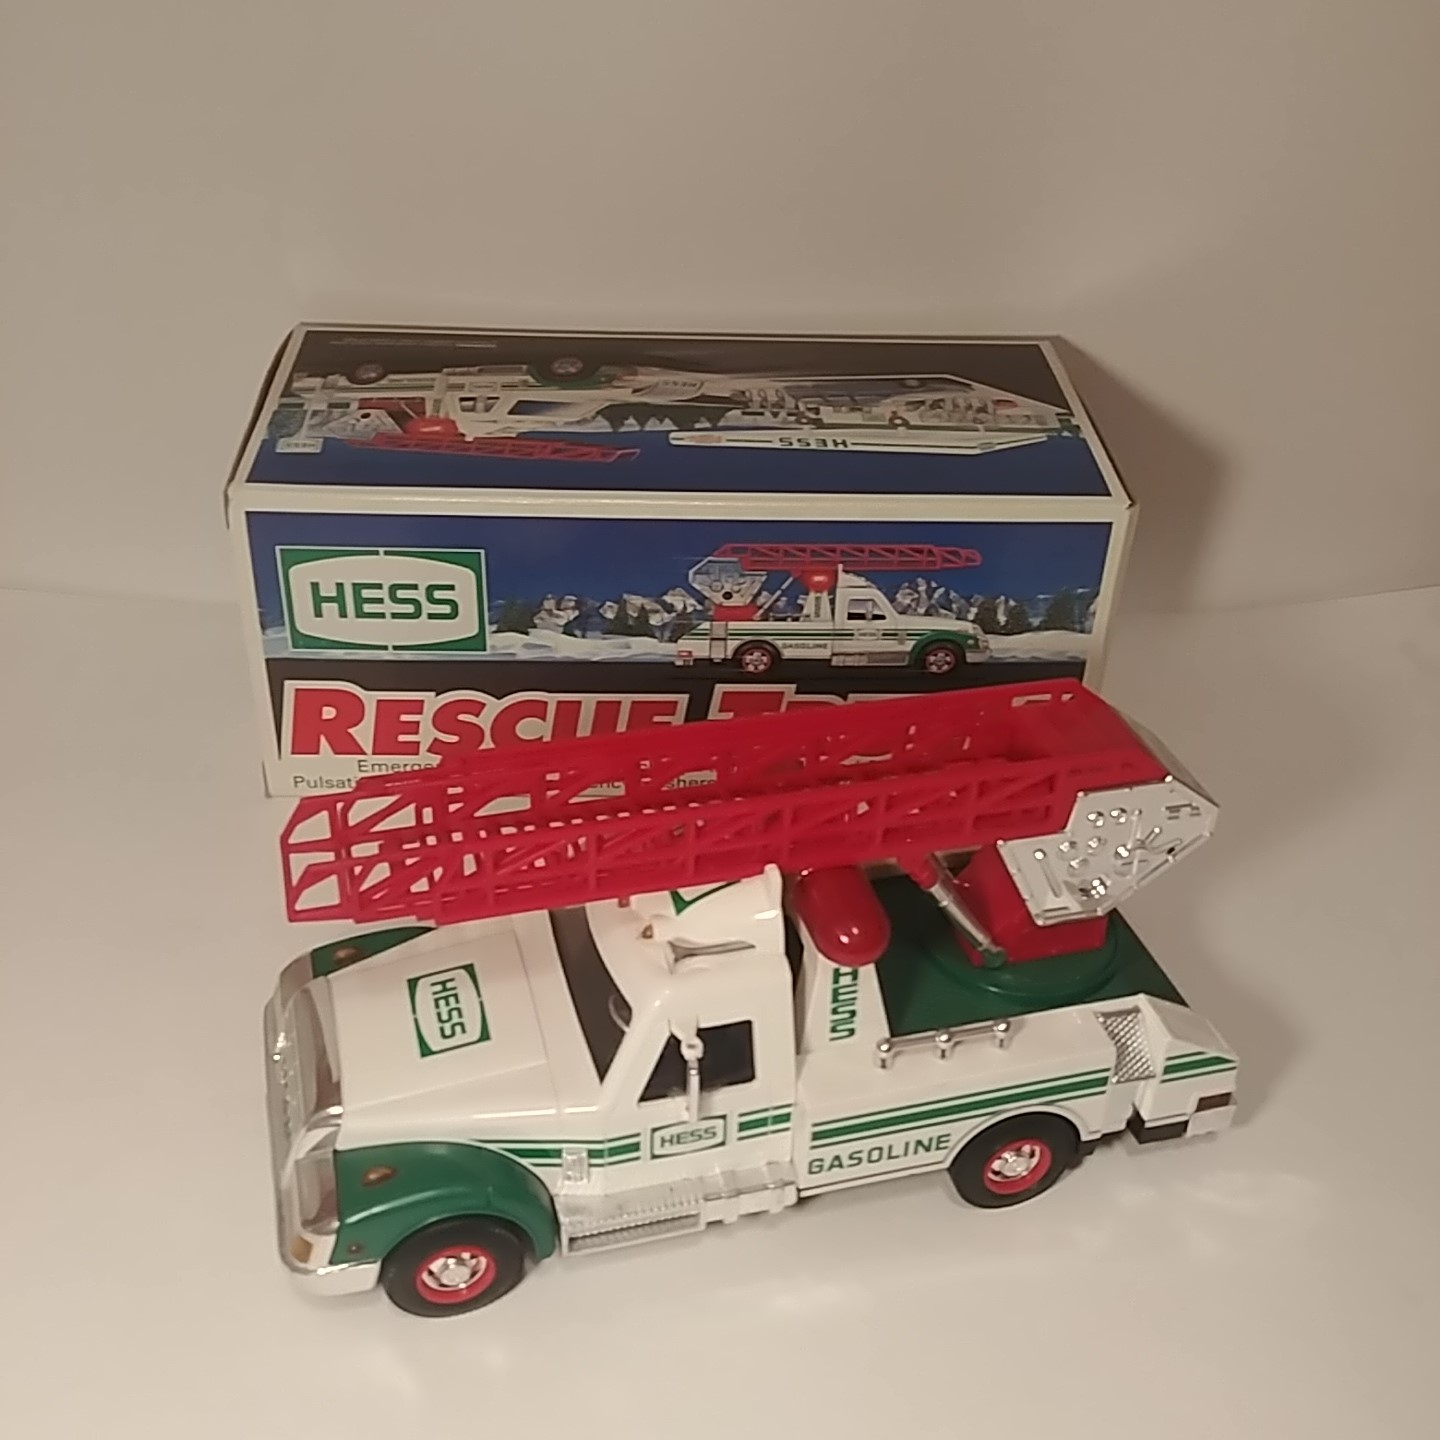 1994 Hess "Rescue" Truck